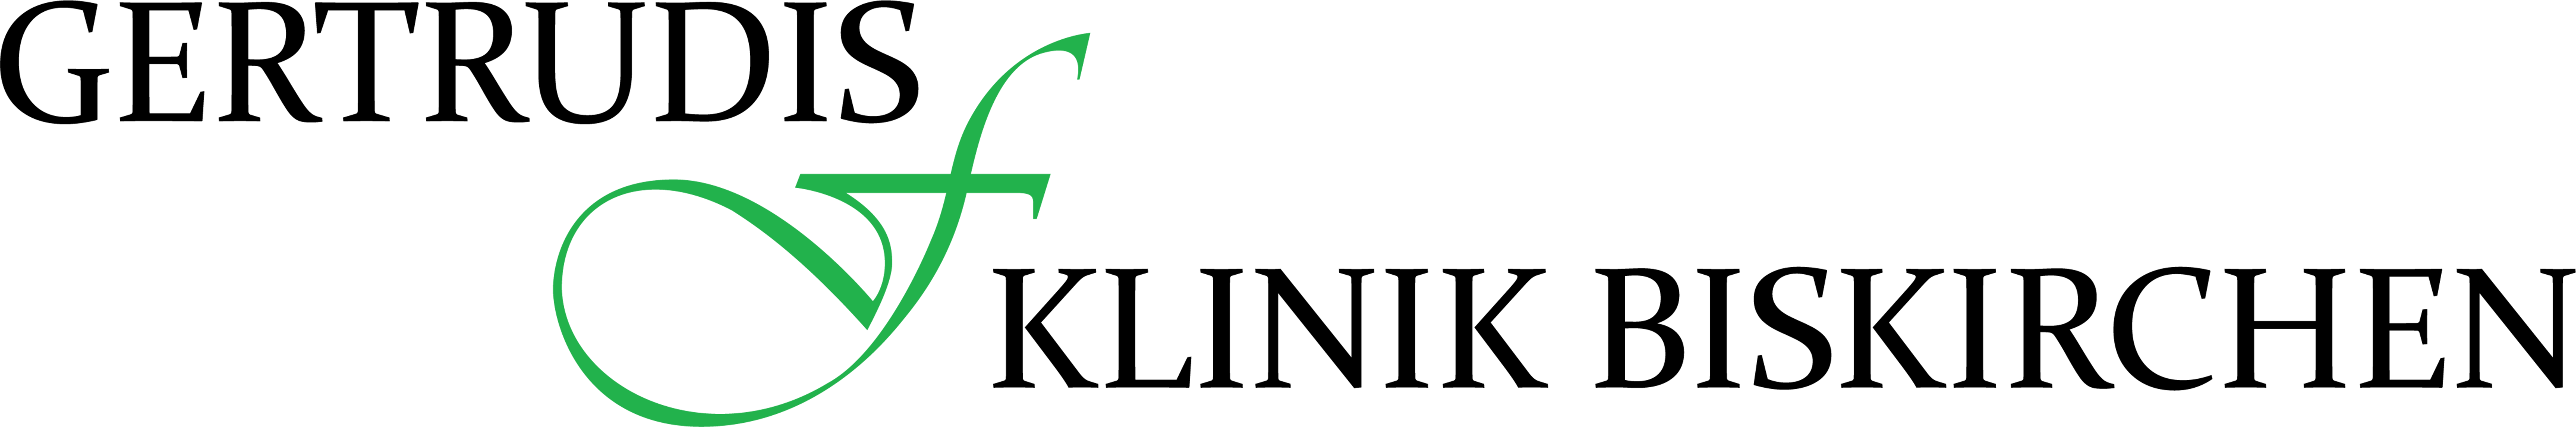 Gertrudis_F_Klinik_Biskirchen_Logo-Curve copy